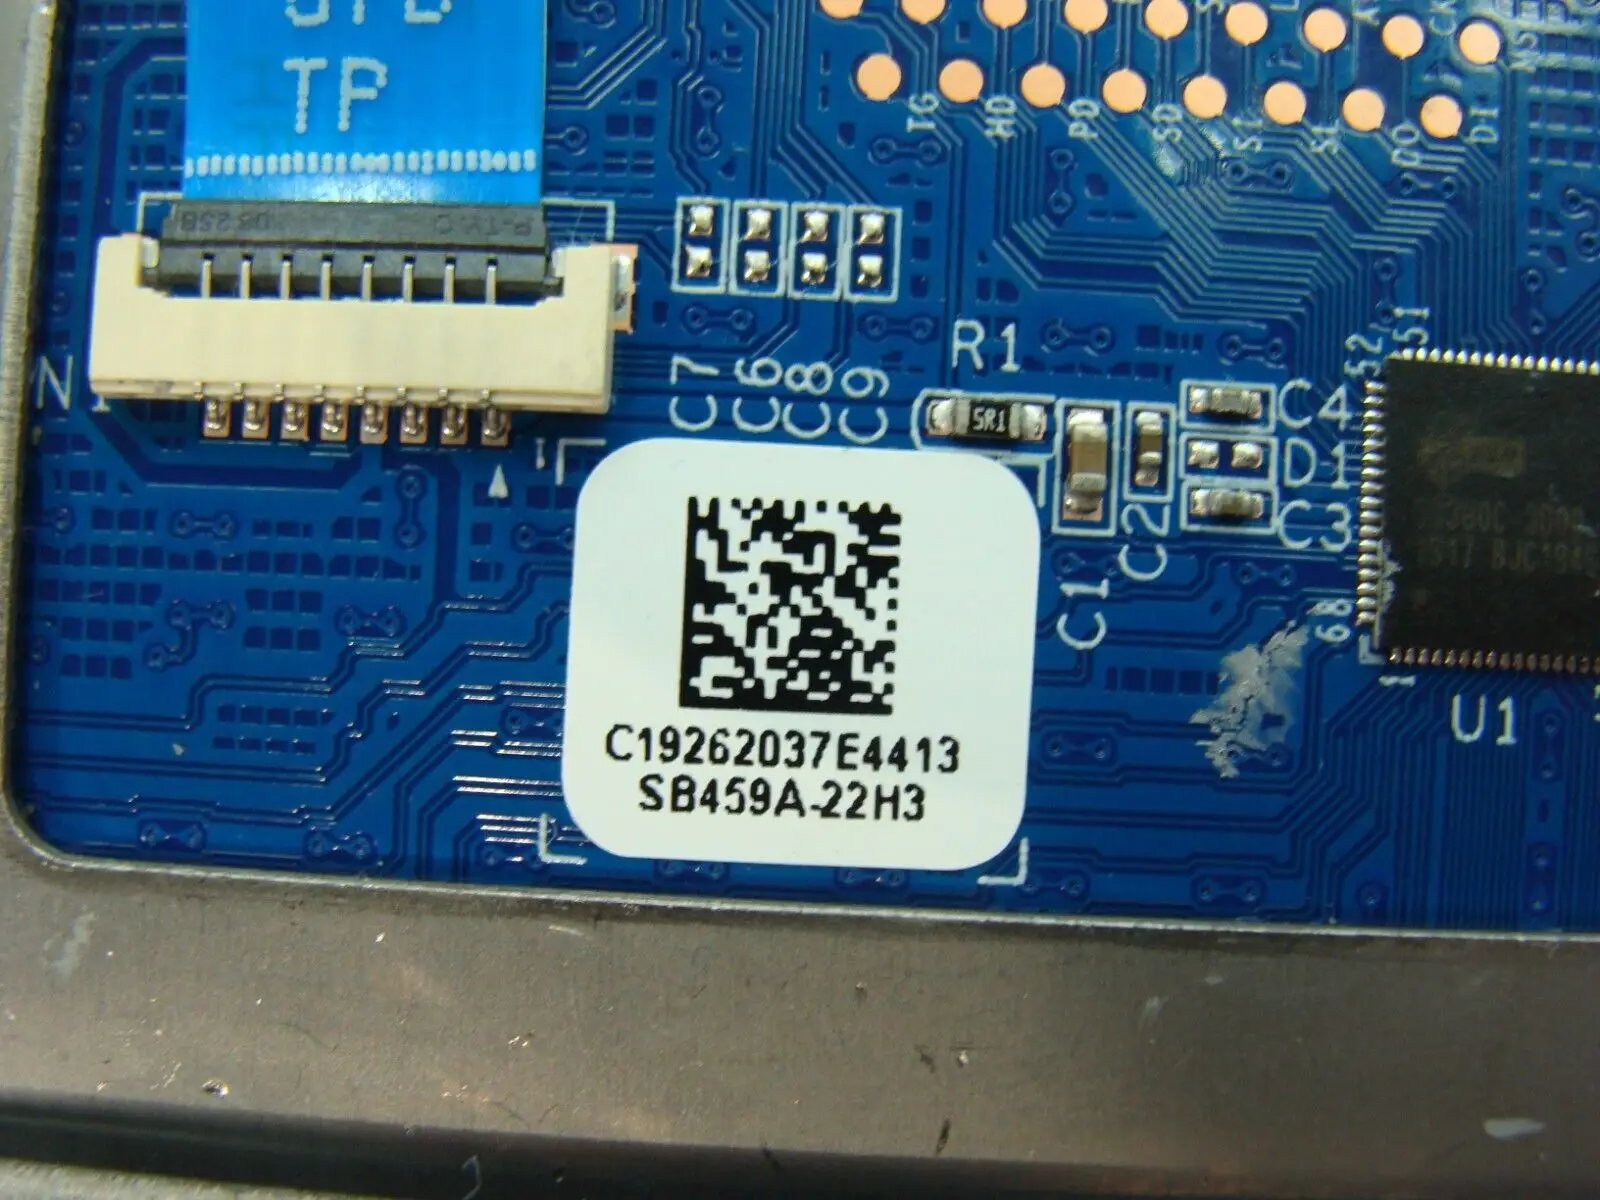 HP Pavilion 15.6” 15-dc2064st Palmrest w/TouchPad Backlit Keyboard L24752-001